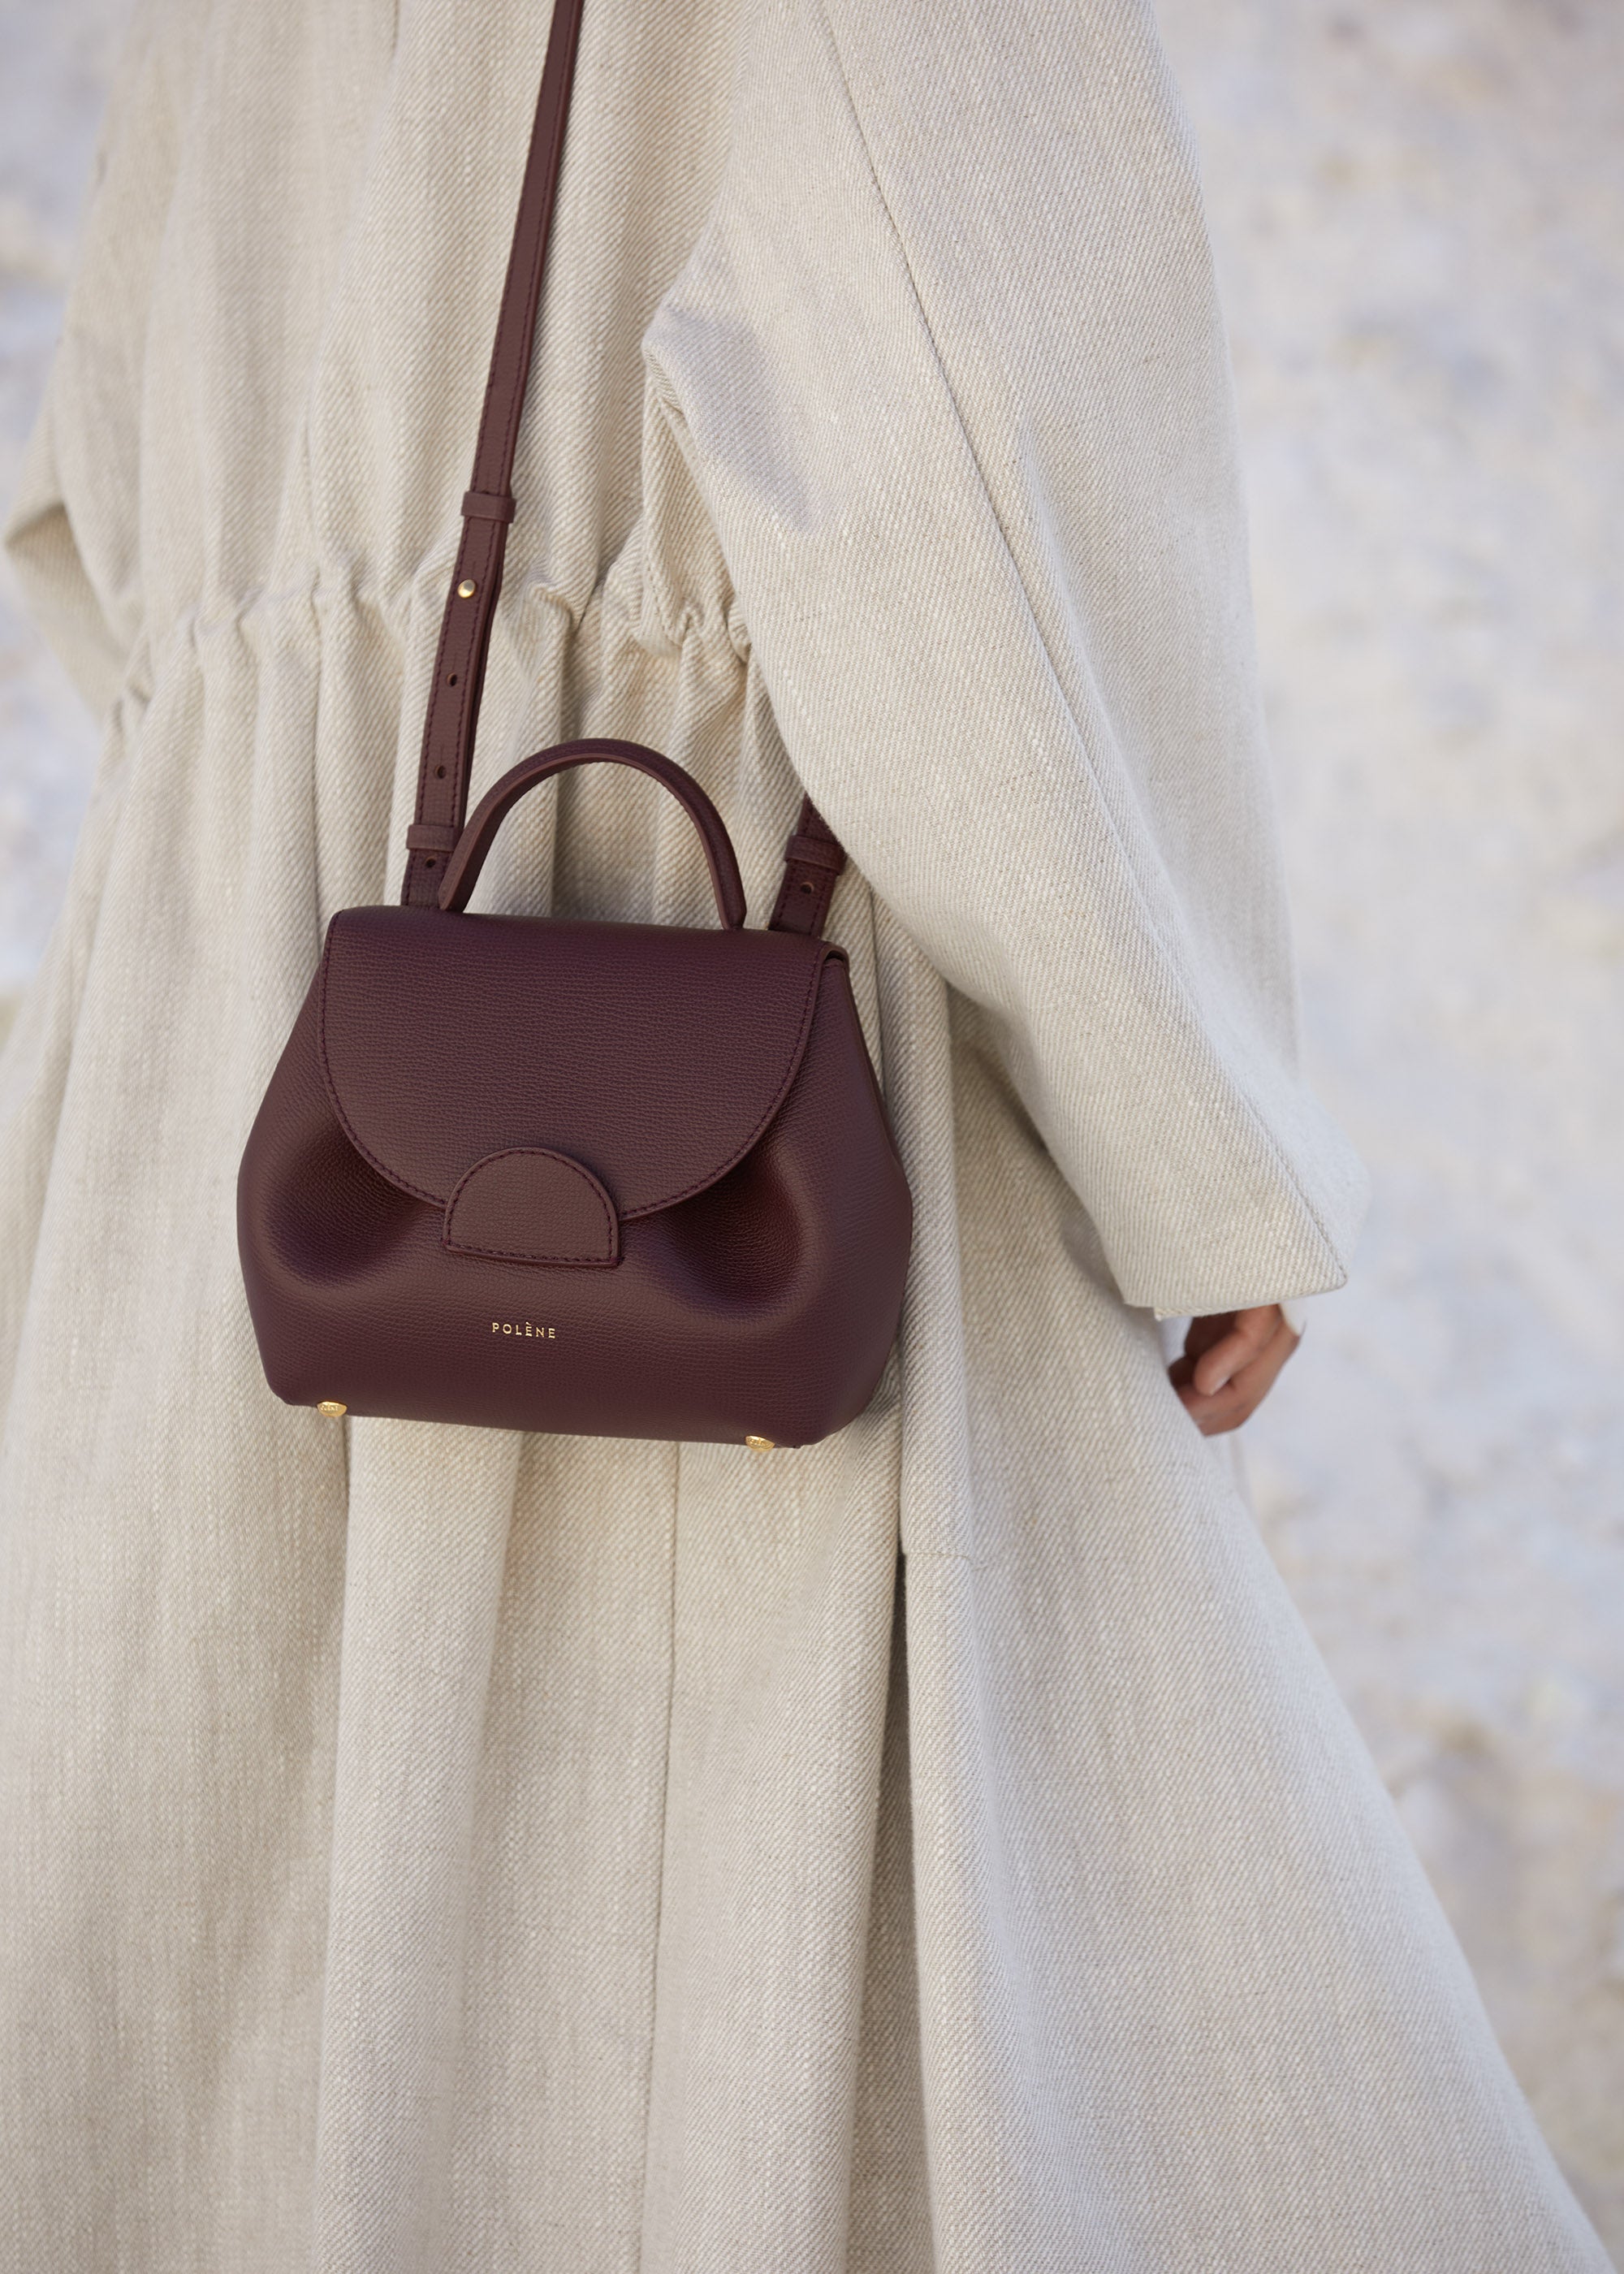 New obsession - burgundy bags. 🍒 : r/RepladiesDesigner